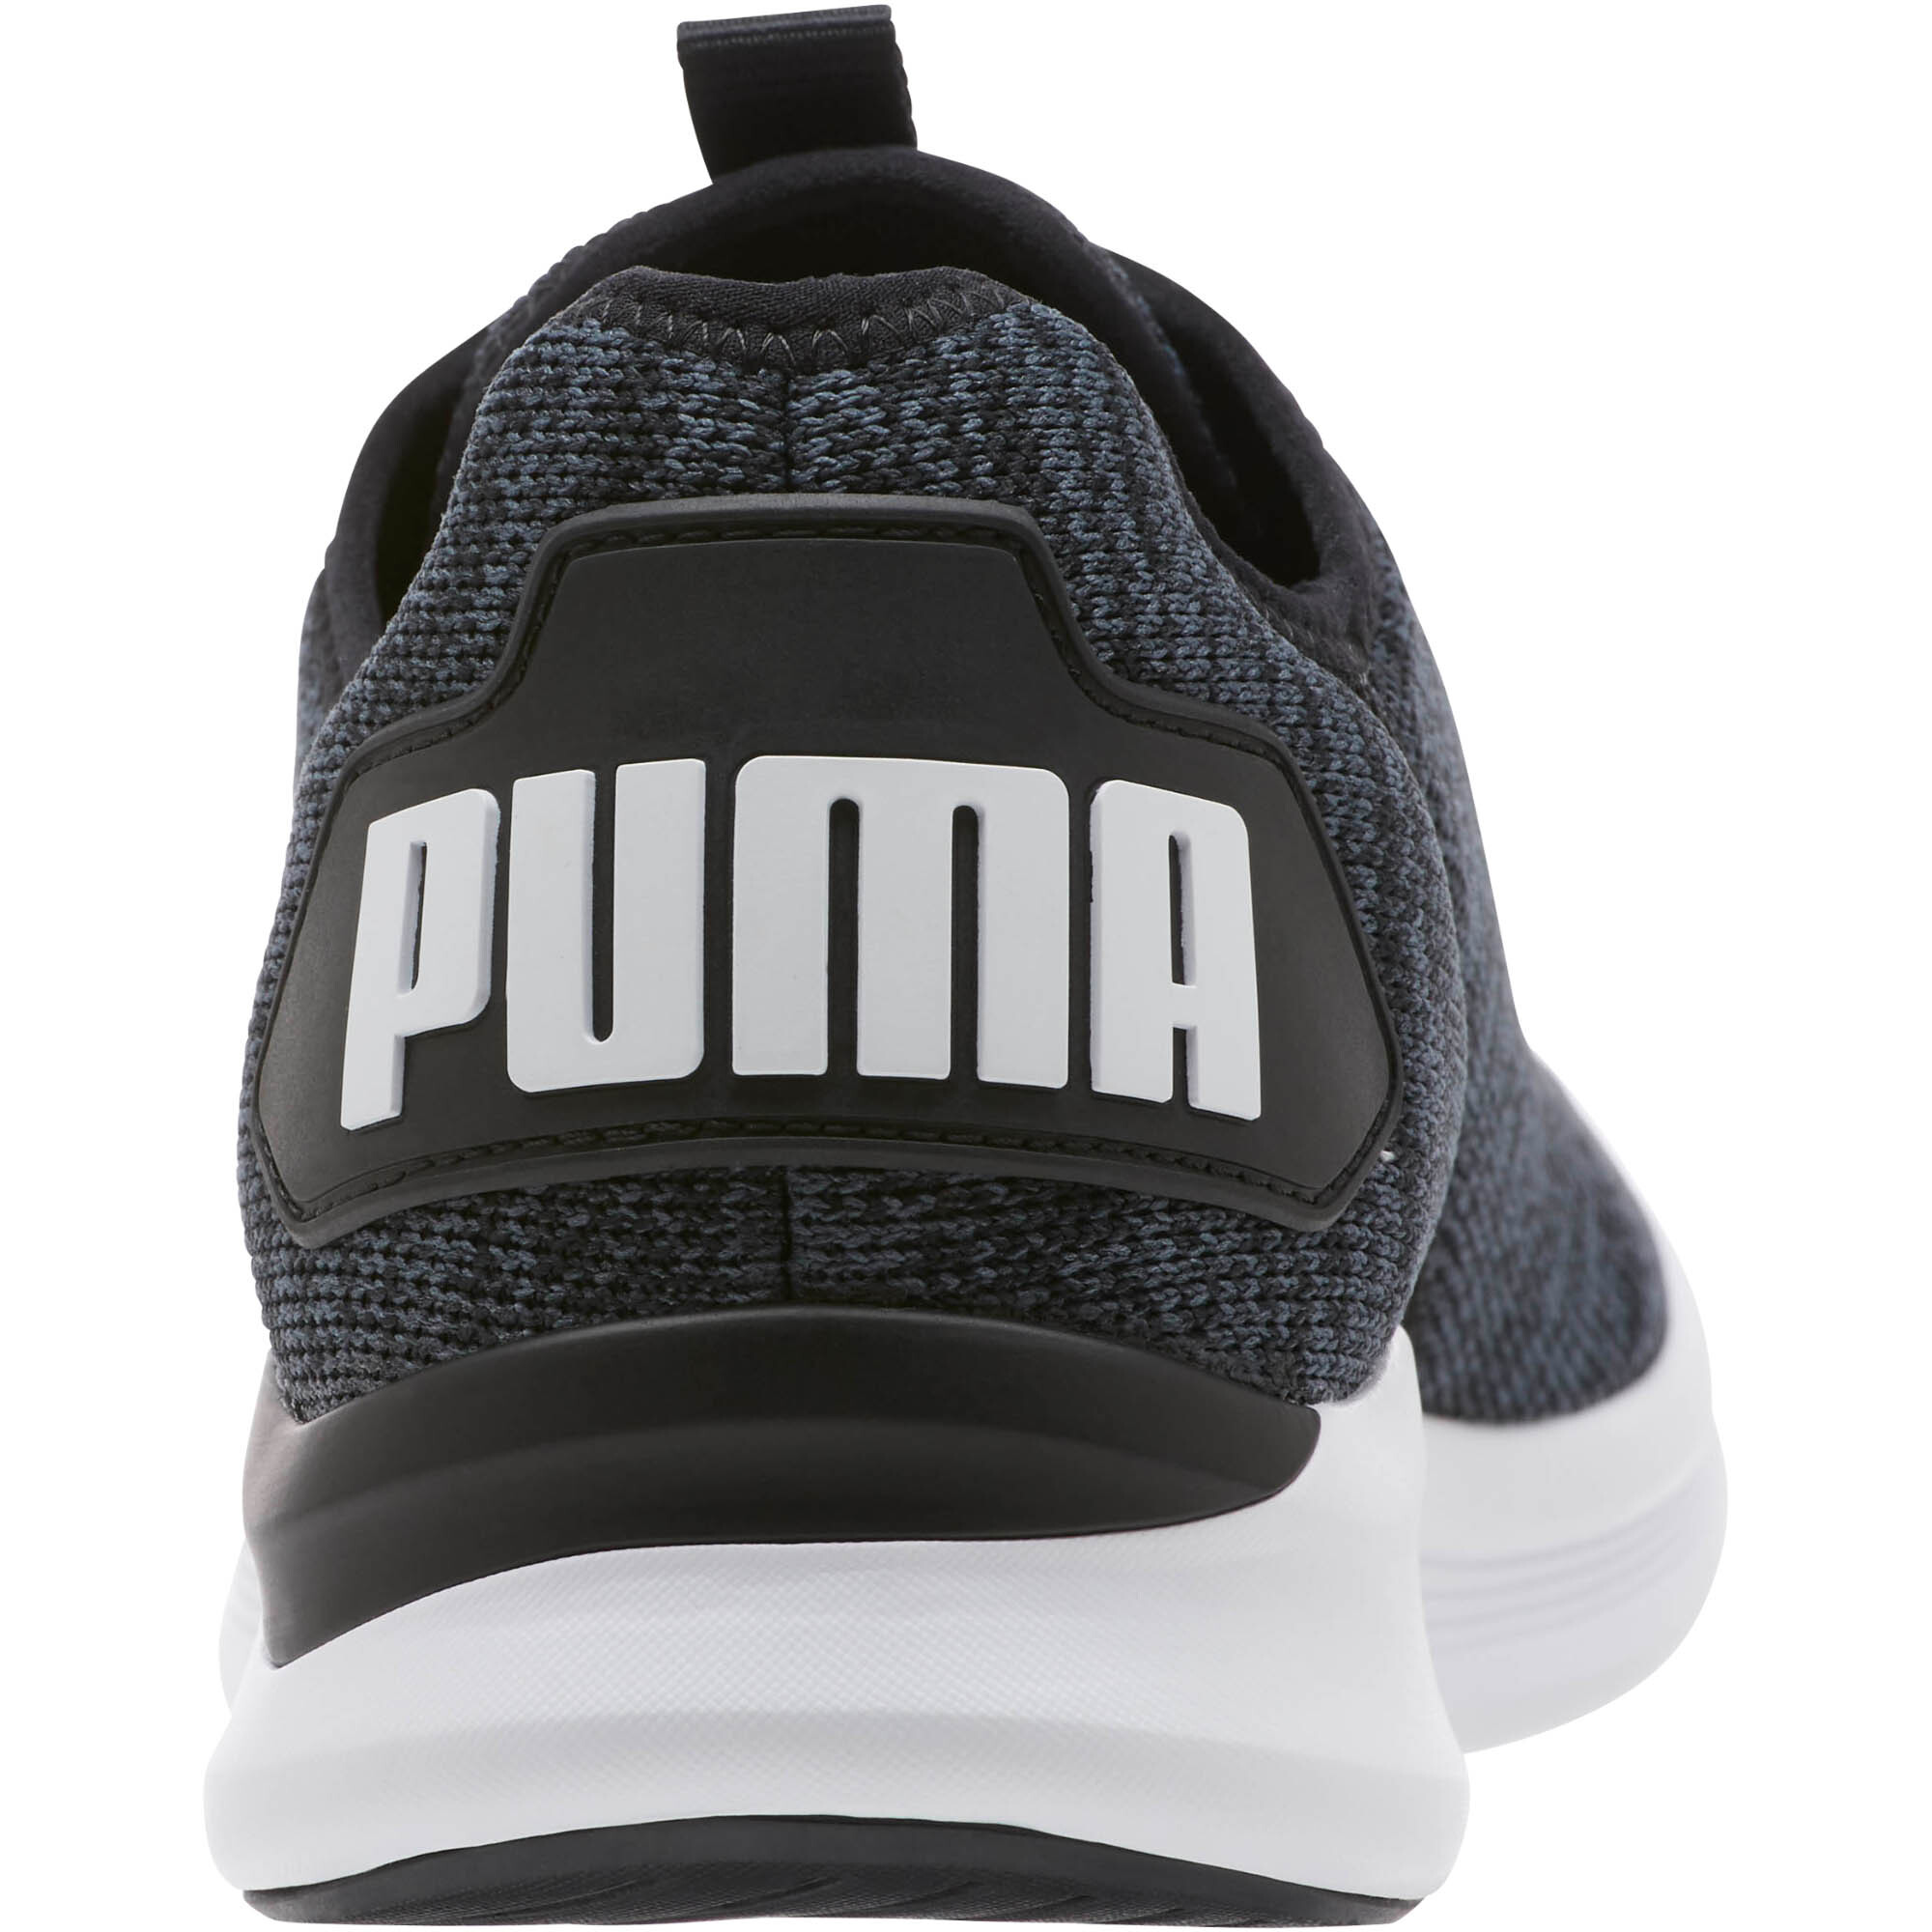 puma ballast men's running shoes